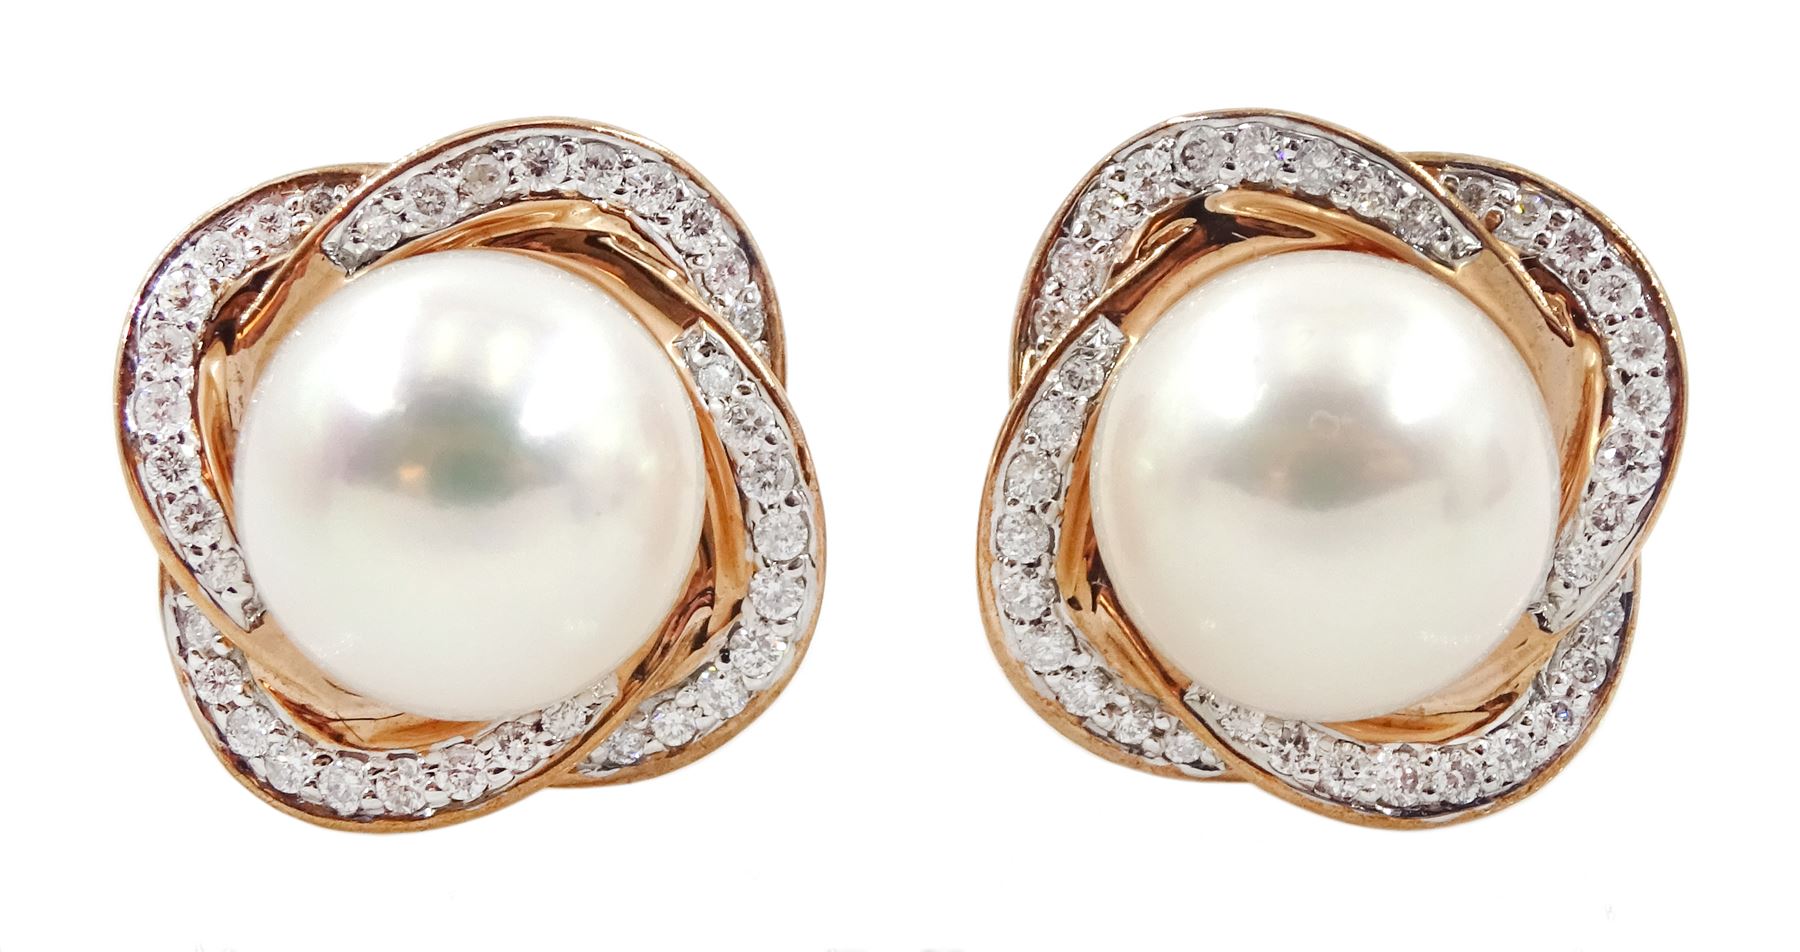 Pair of 9ct rose gold pearl stud earrings